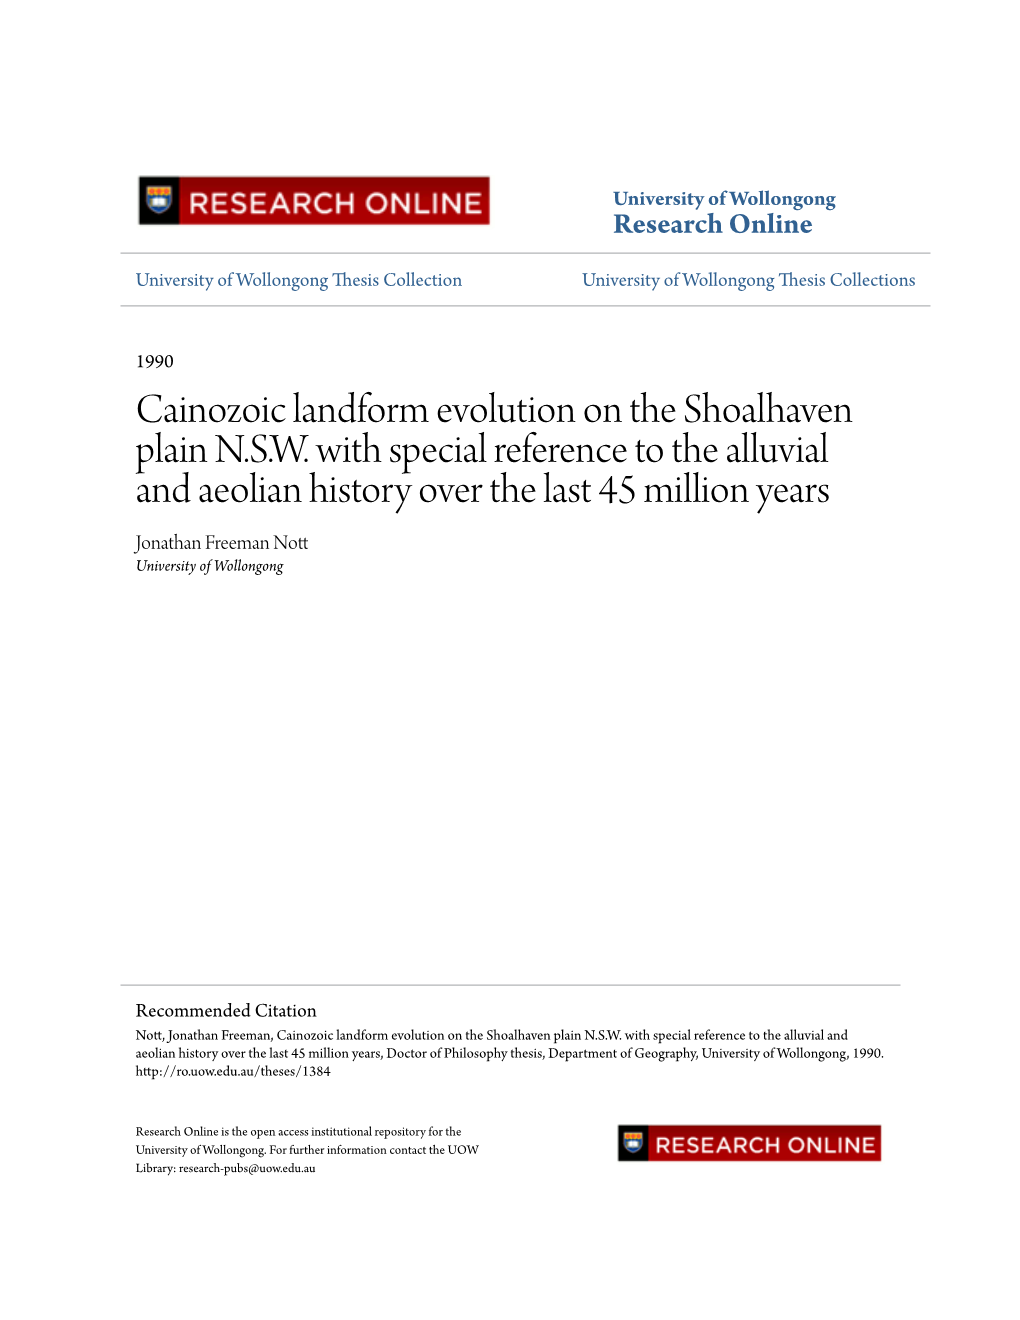 Cainozoic Landform Evolution on the Shoalhaven Plain N.S.W. With